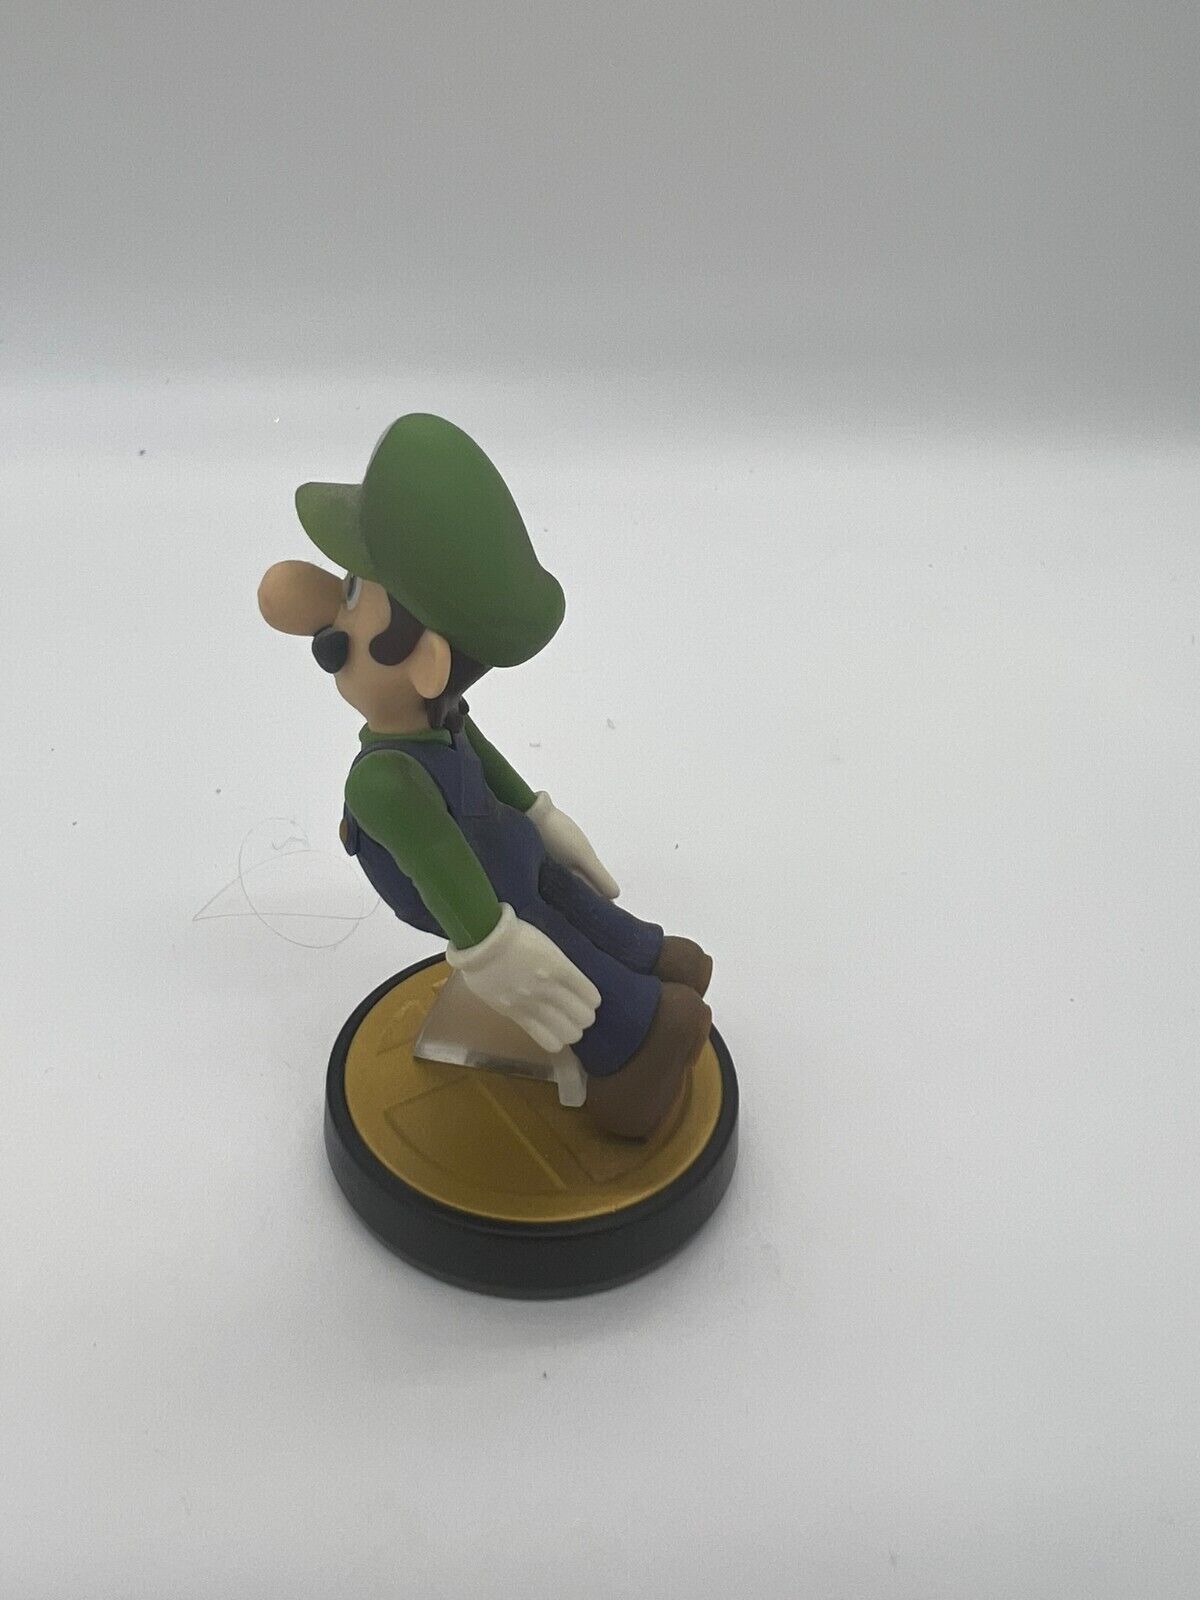 Luigi Amiibo Super Smash Bros Series Figure